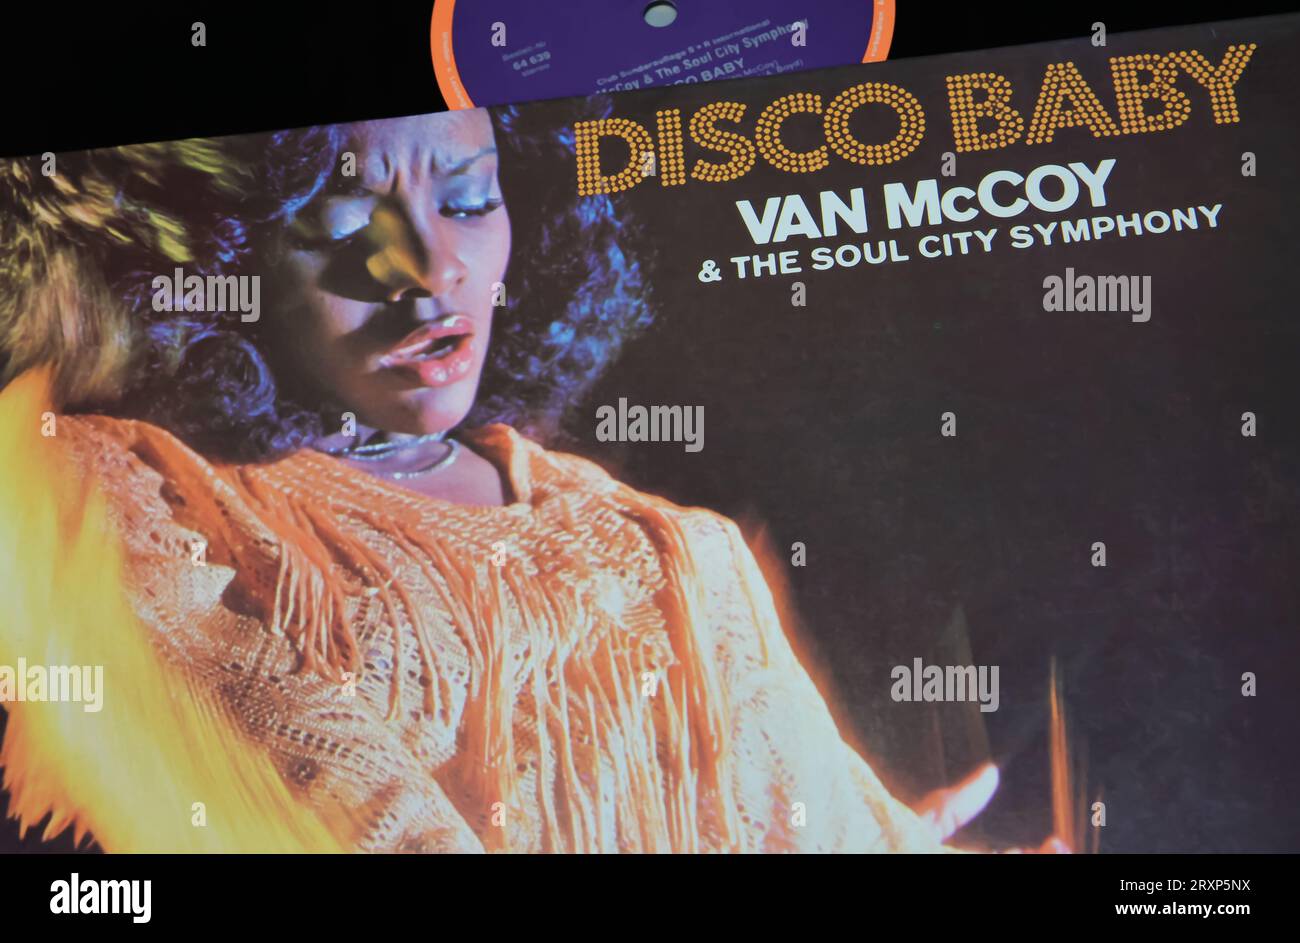 Spotlight Dance Hits - Vinil Records - Discos de Vinil